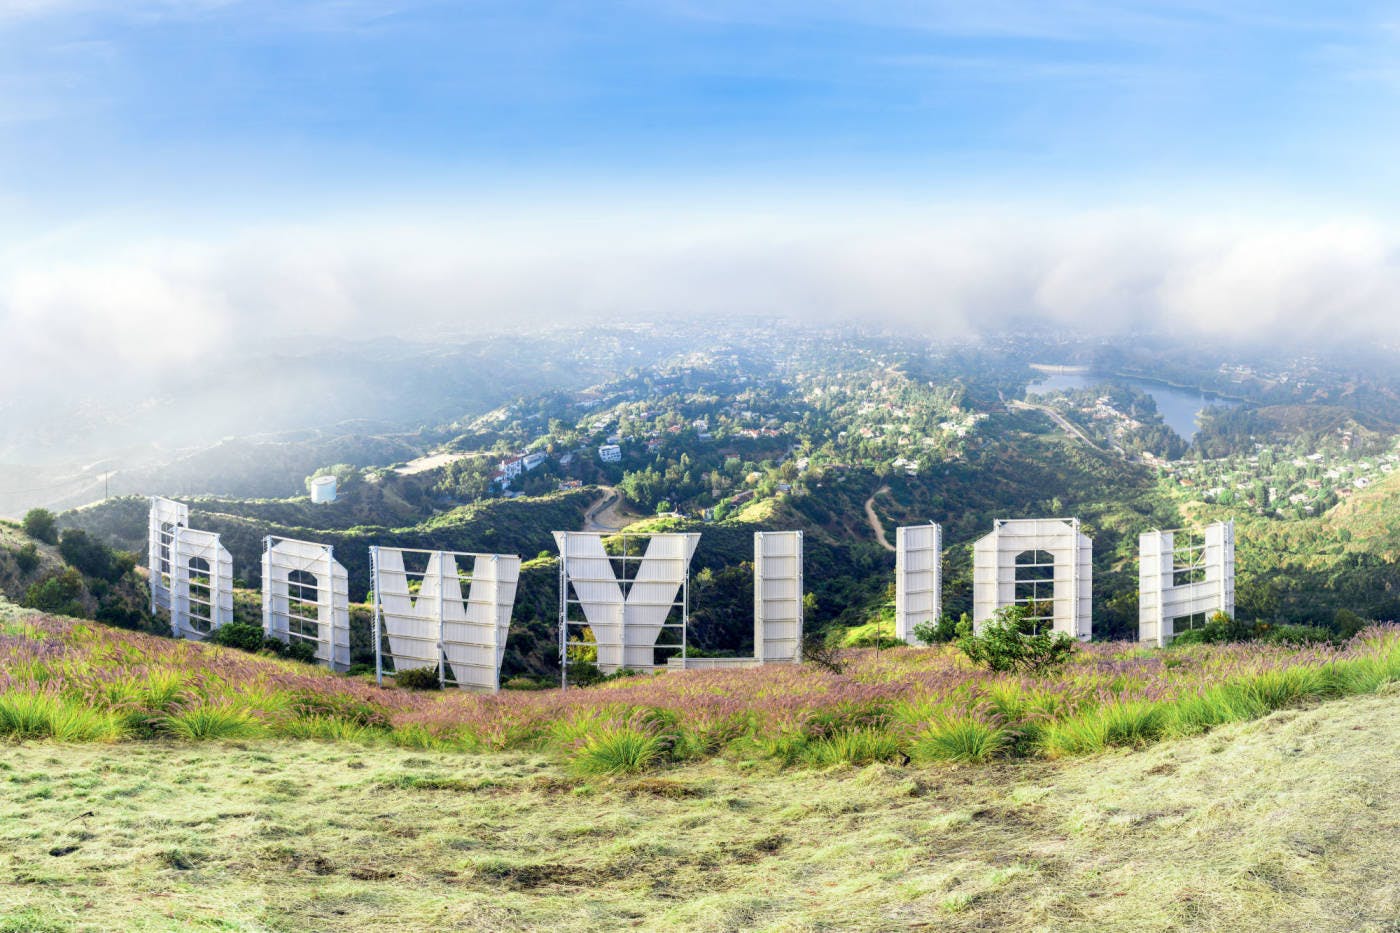 Hollywood_Sign.jpeg